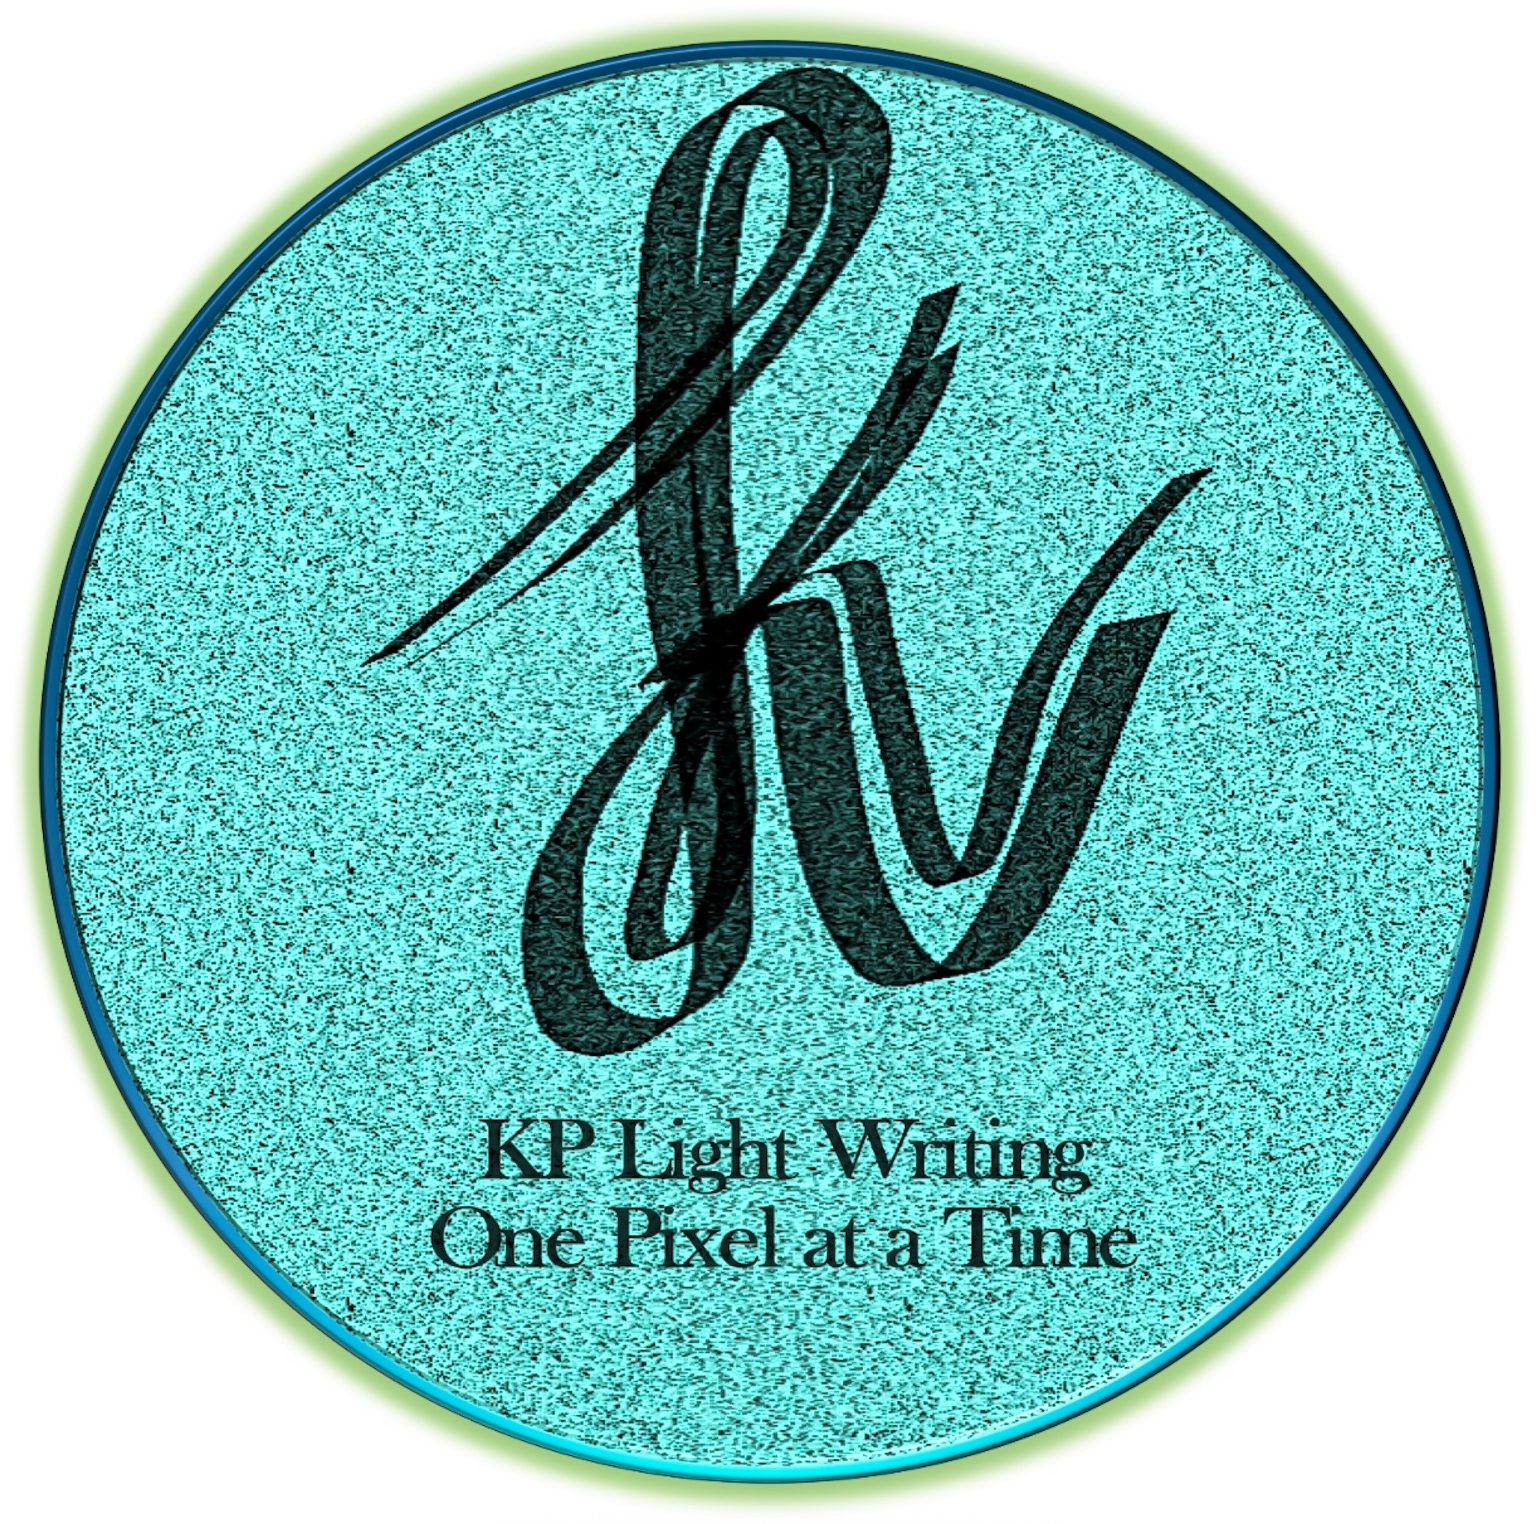 KP Light Writing